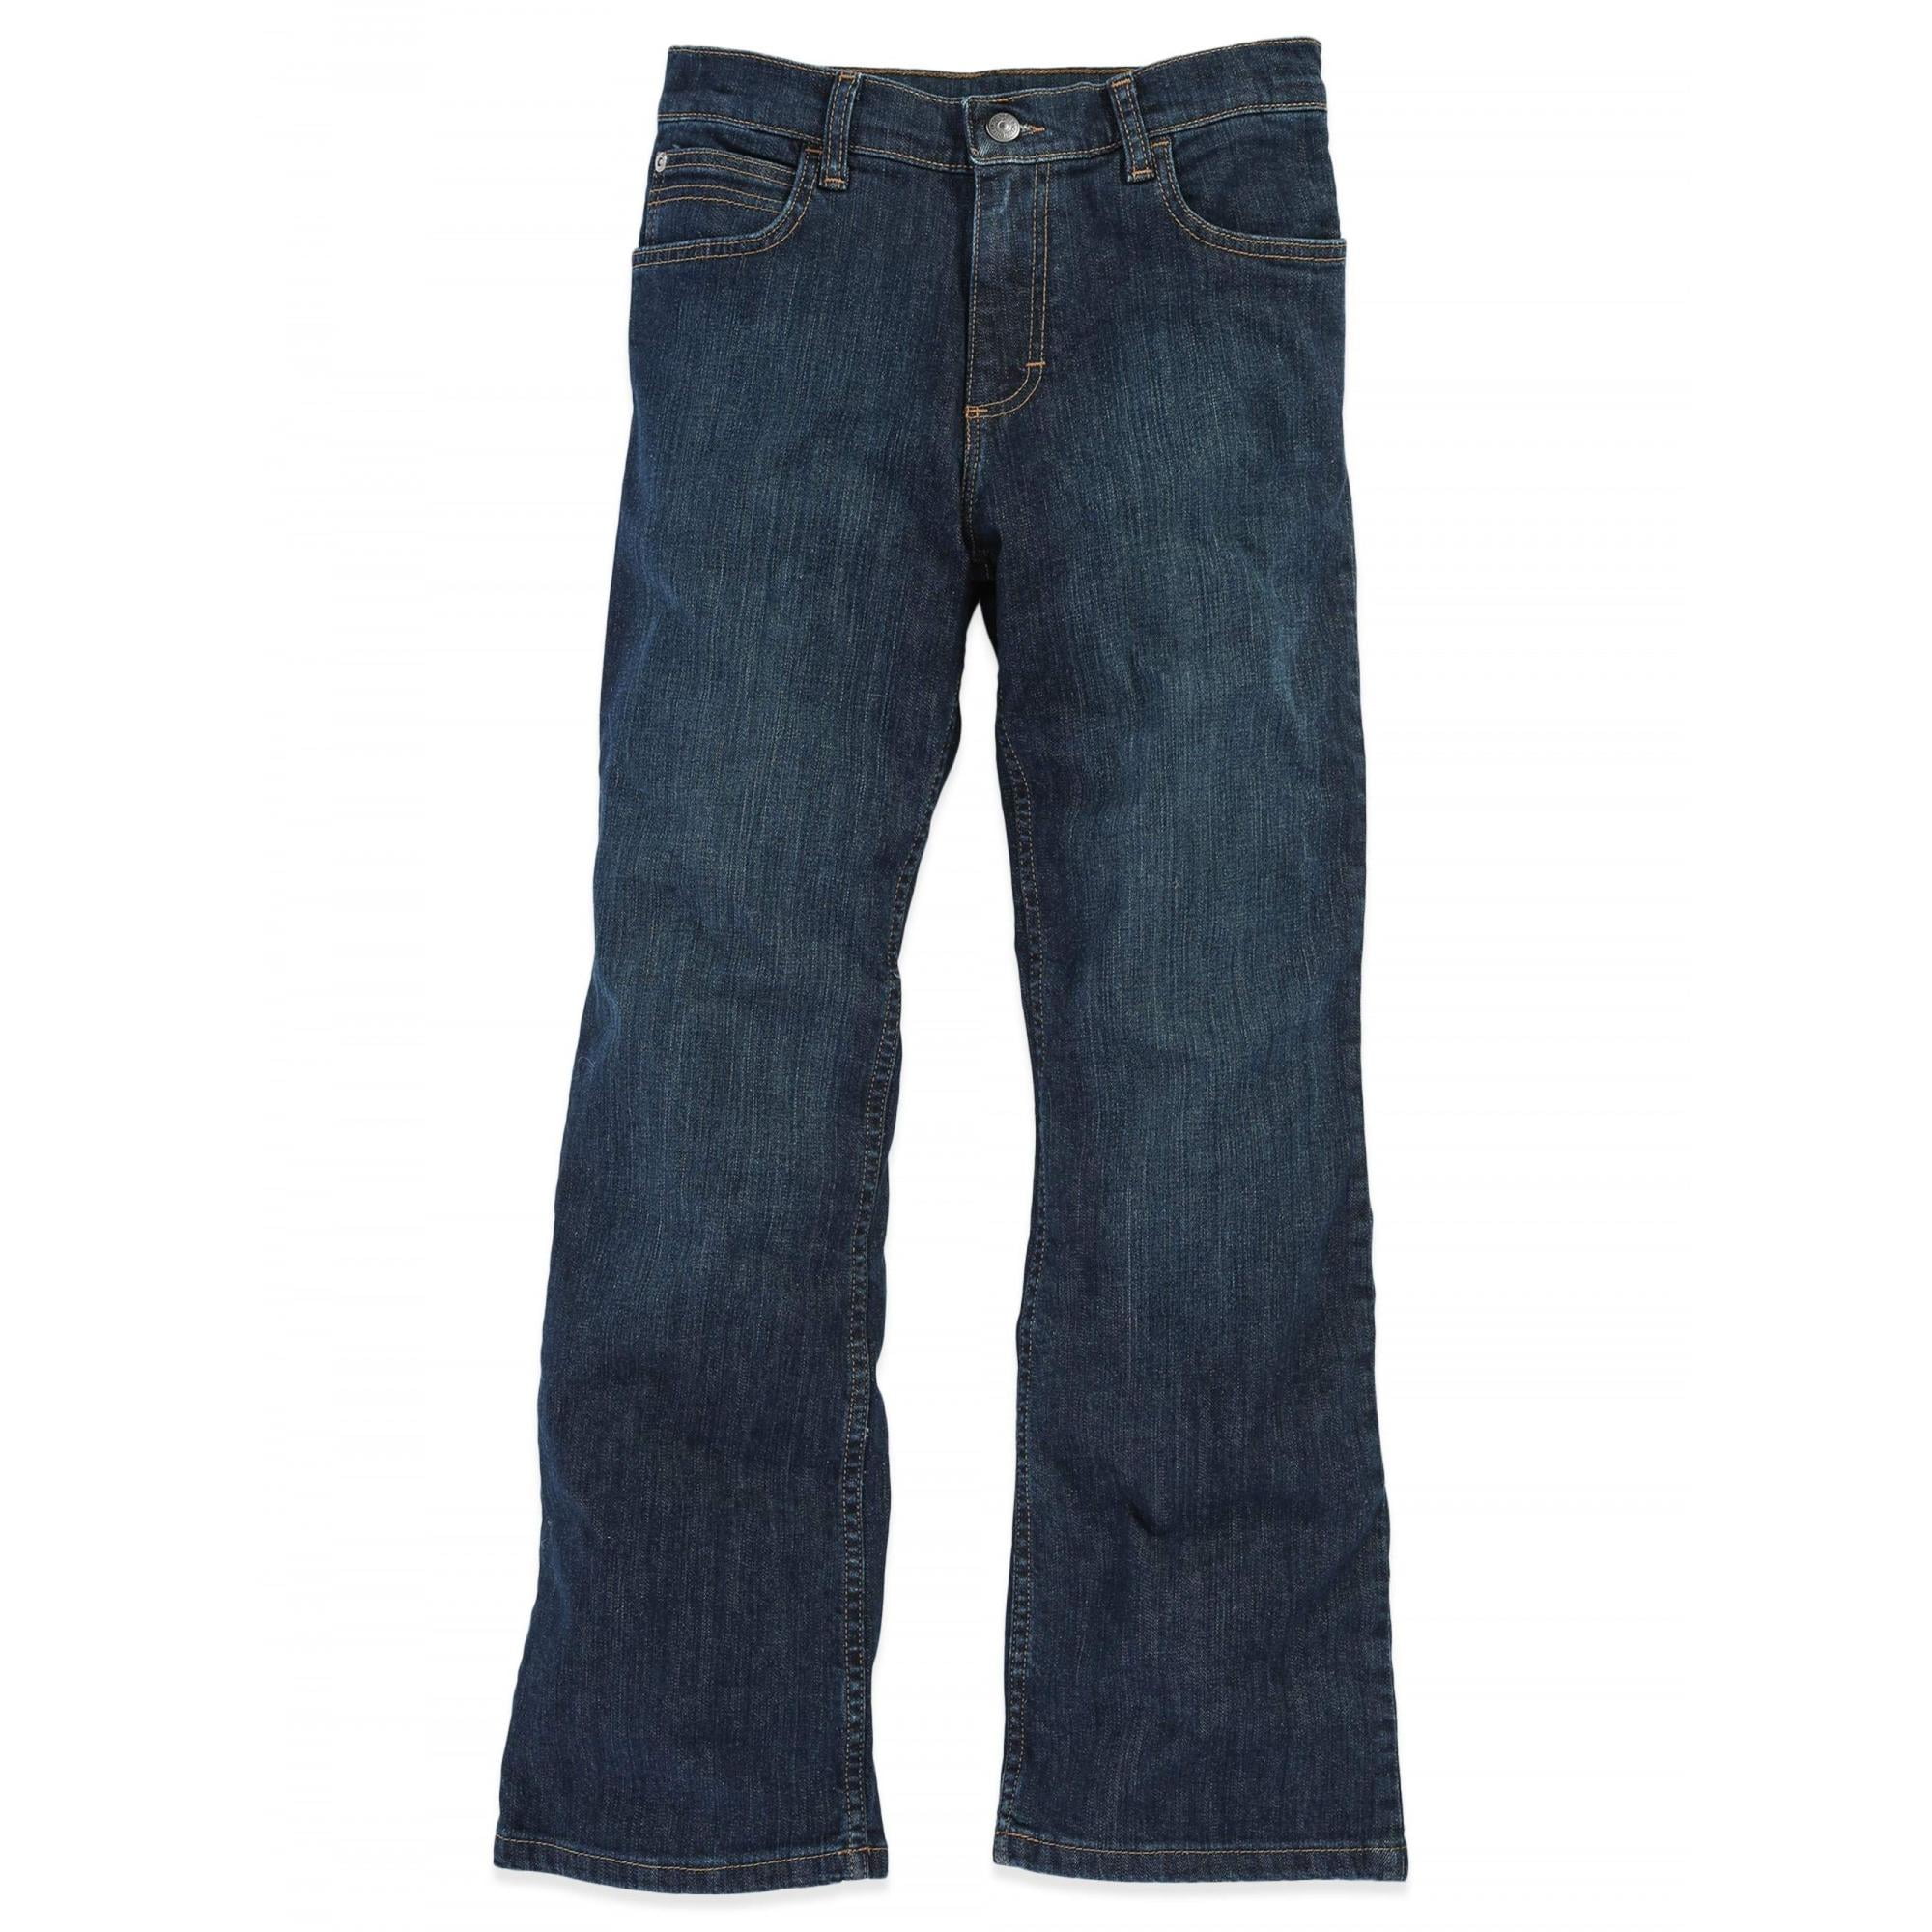 wrangler performance jeans walmart